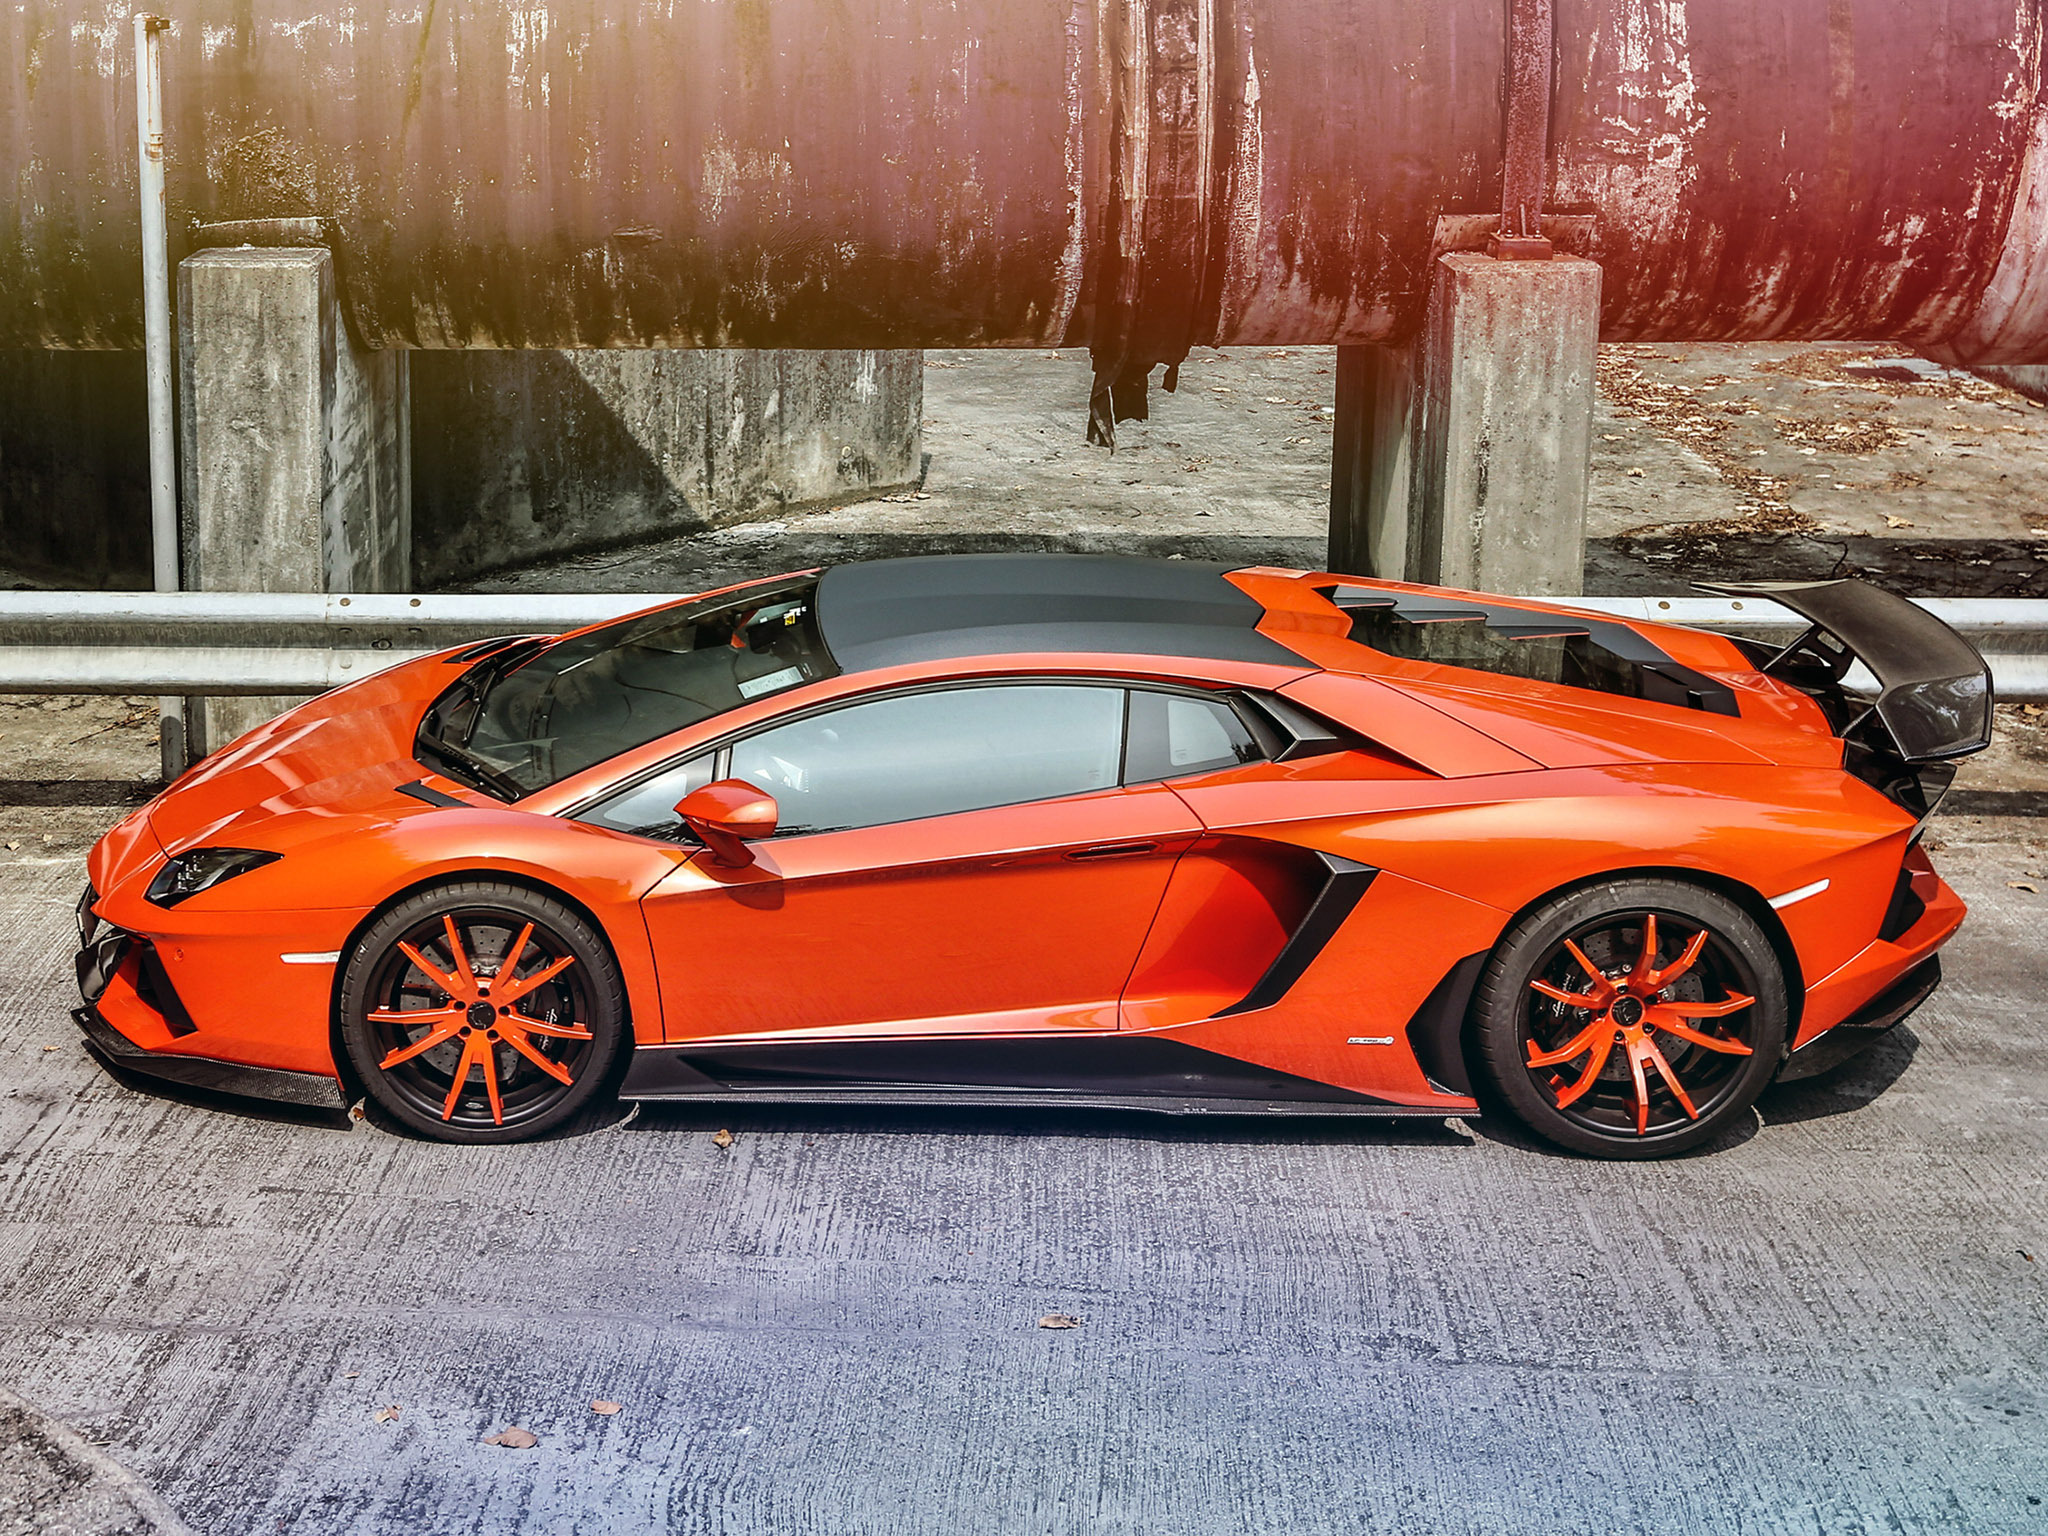 Laden Sie das Lamborghini Aventador Lp700 4, Lamborghini, Fahrzeuge-Bild kostenlos auf Ihren PC-Desktop herunter